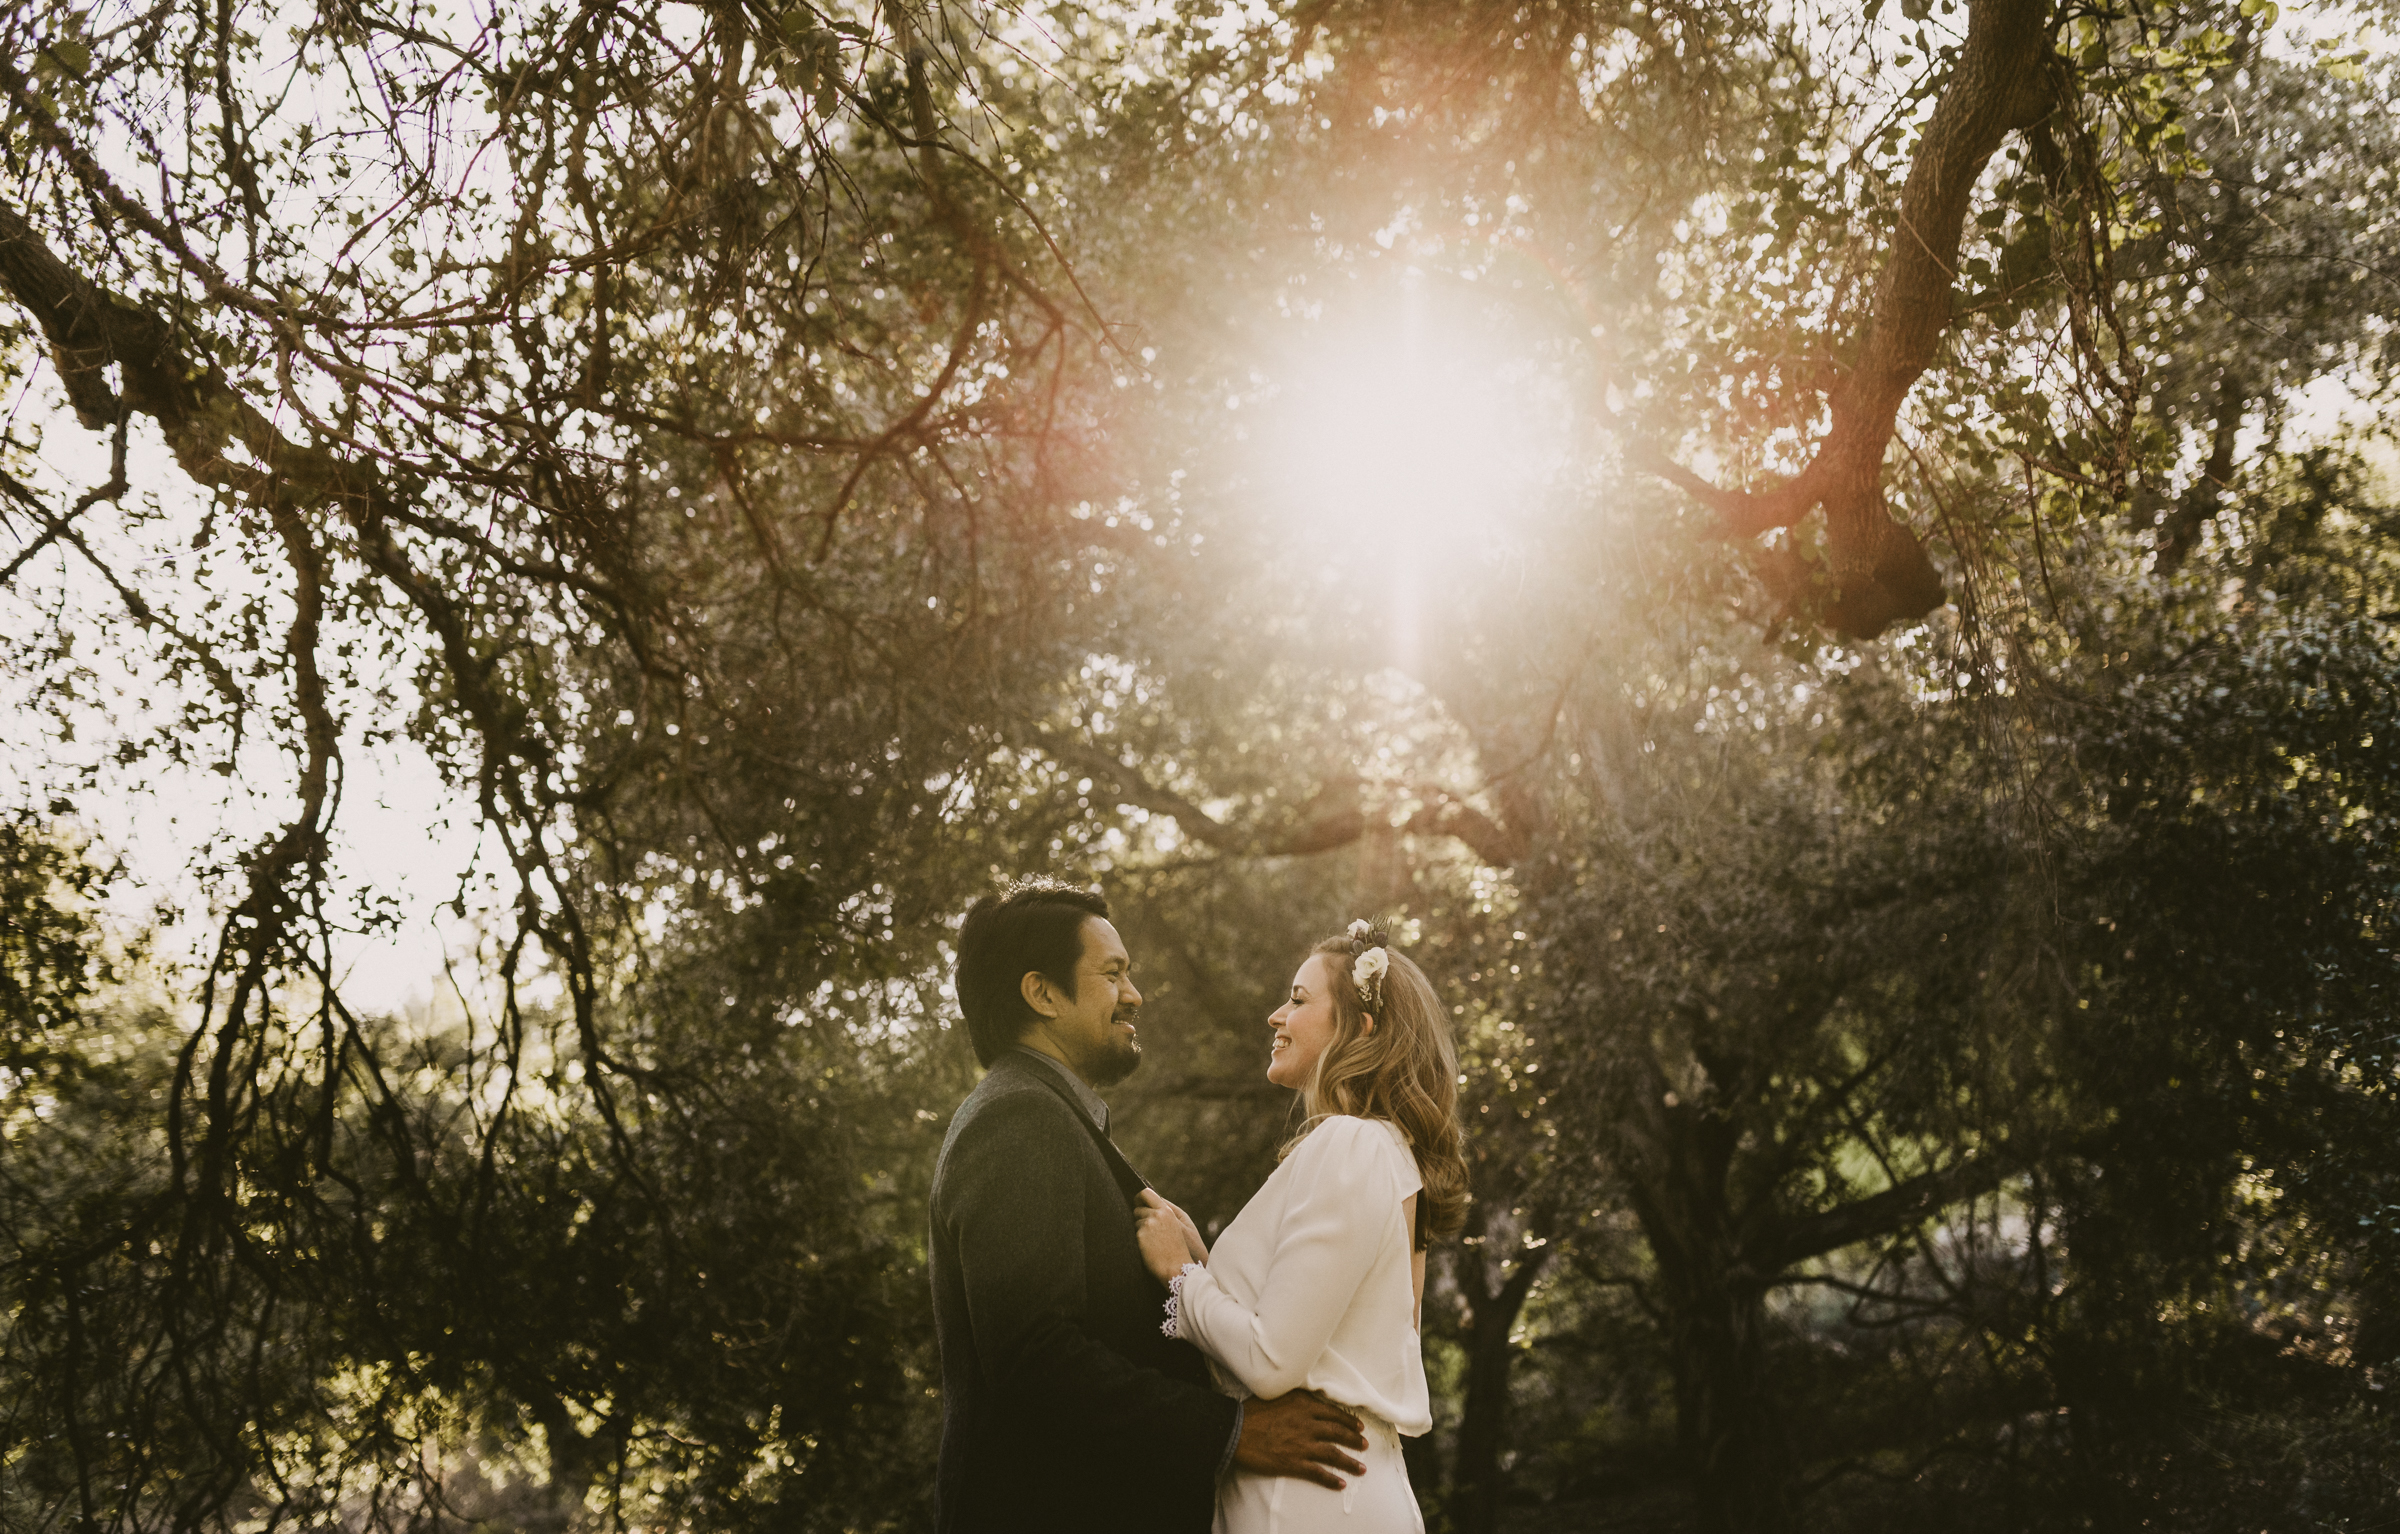 ©Isaiah + Taylor Photography - Intimate Elopement, Eaton Canyon, Los Angeles Wedding Photographer-17.jpg